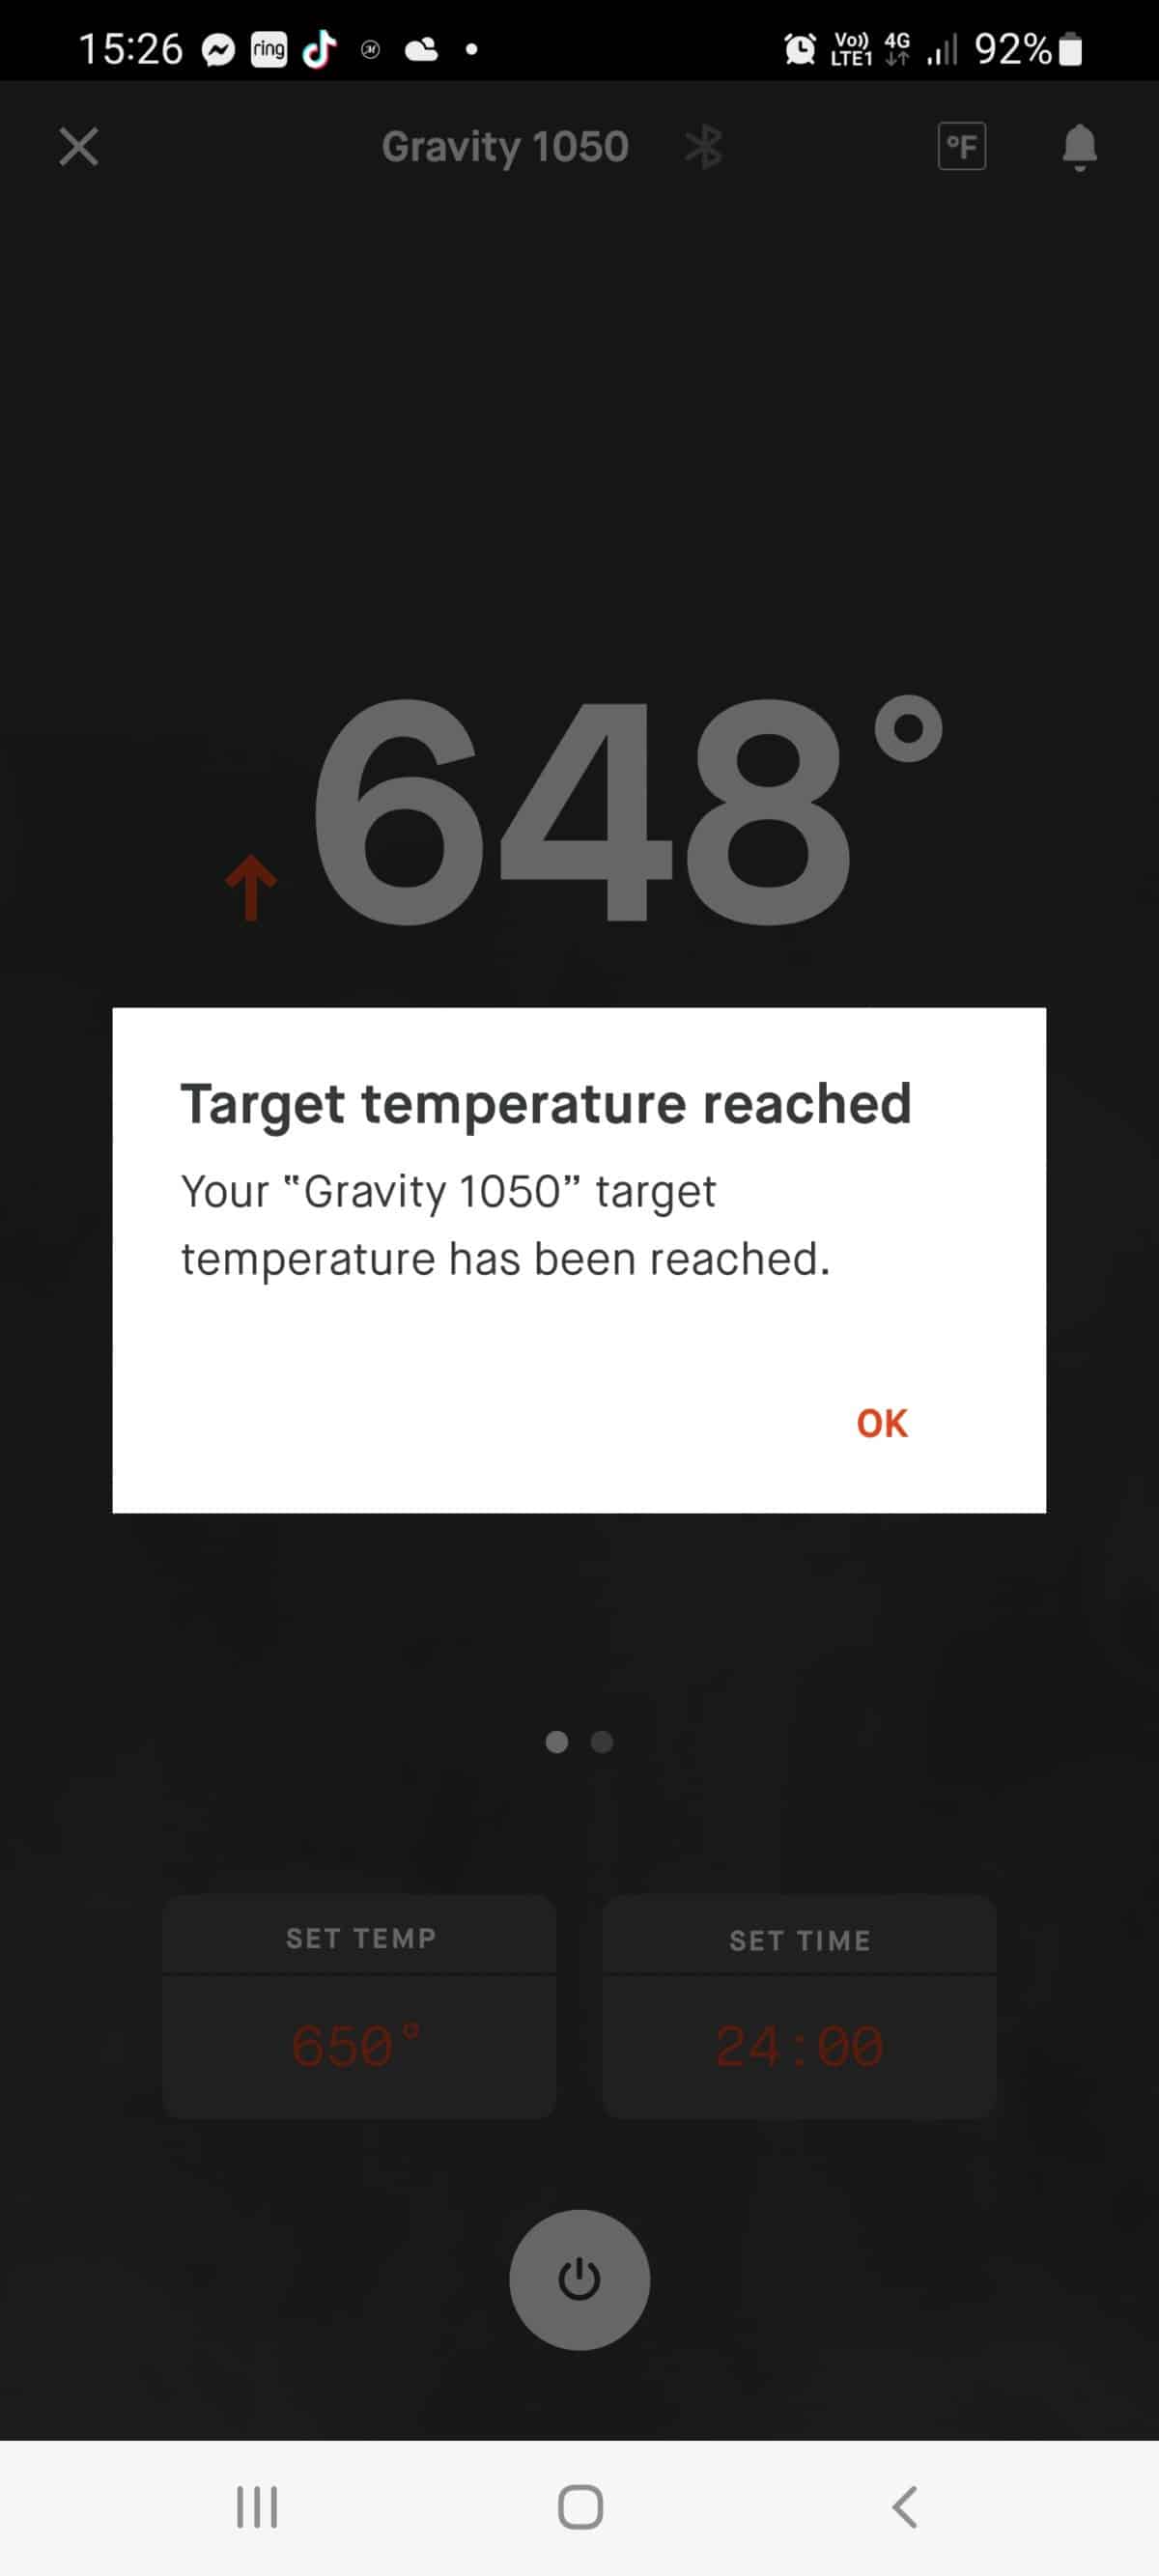 Masterbuilt gravity series smartphone app screenshot showing set temperature has been reached.